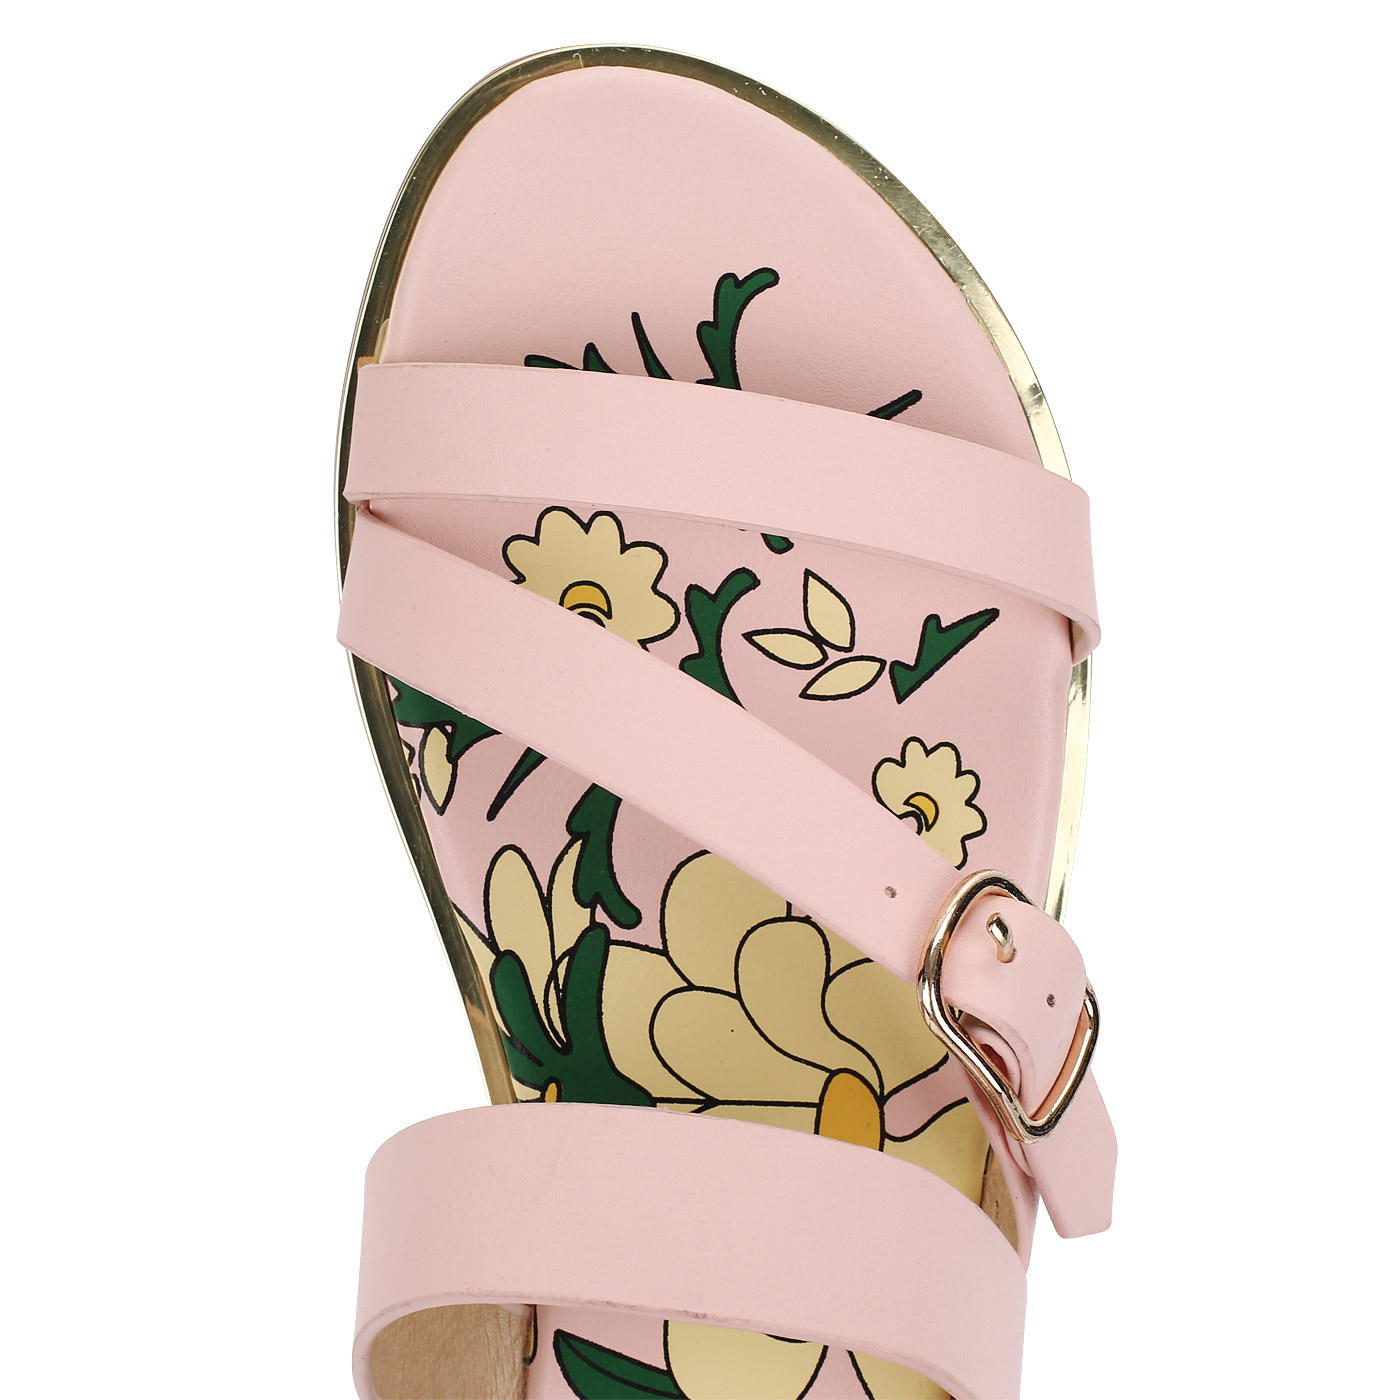 Розовые сандалии с застежкой RB Kamomilla